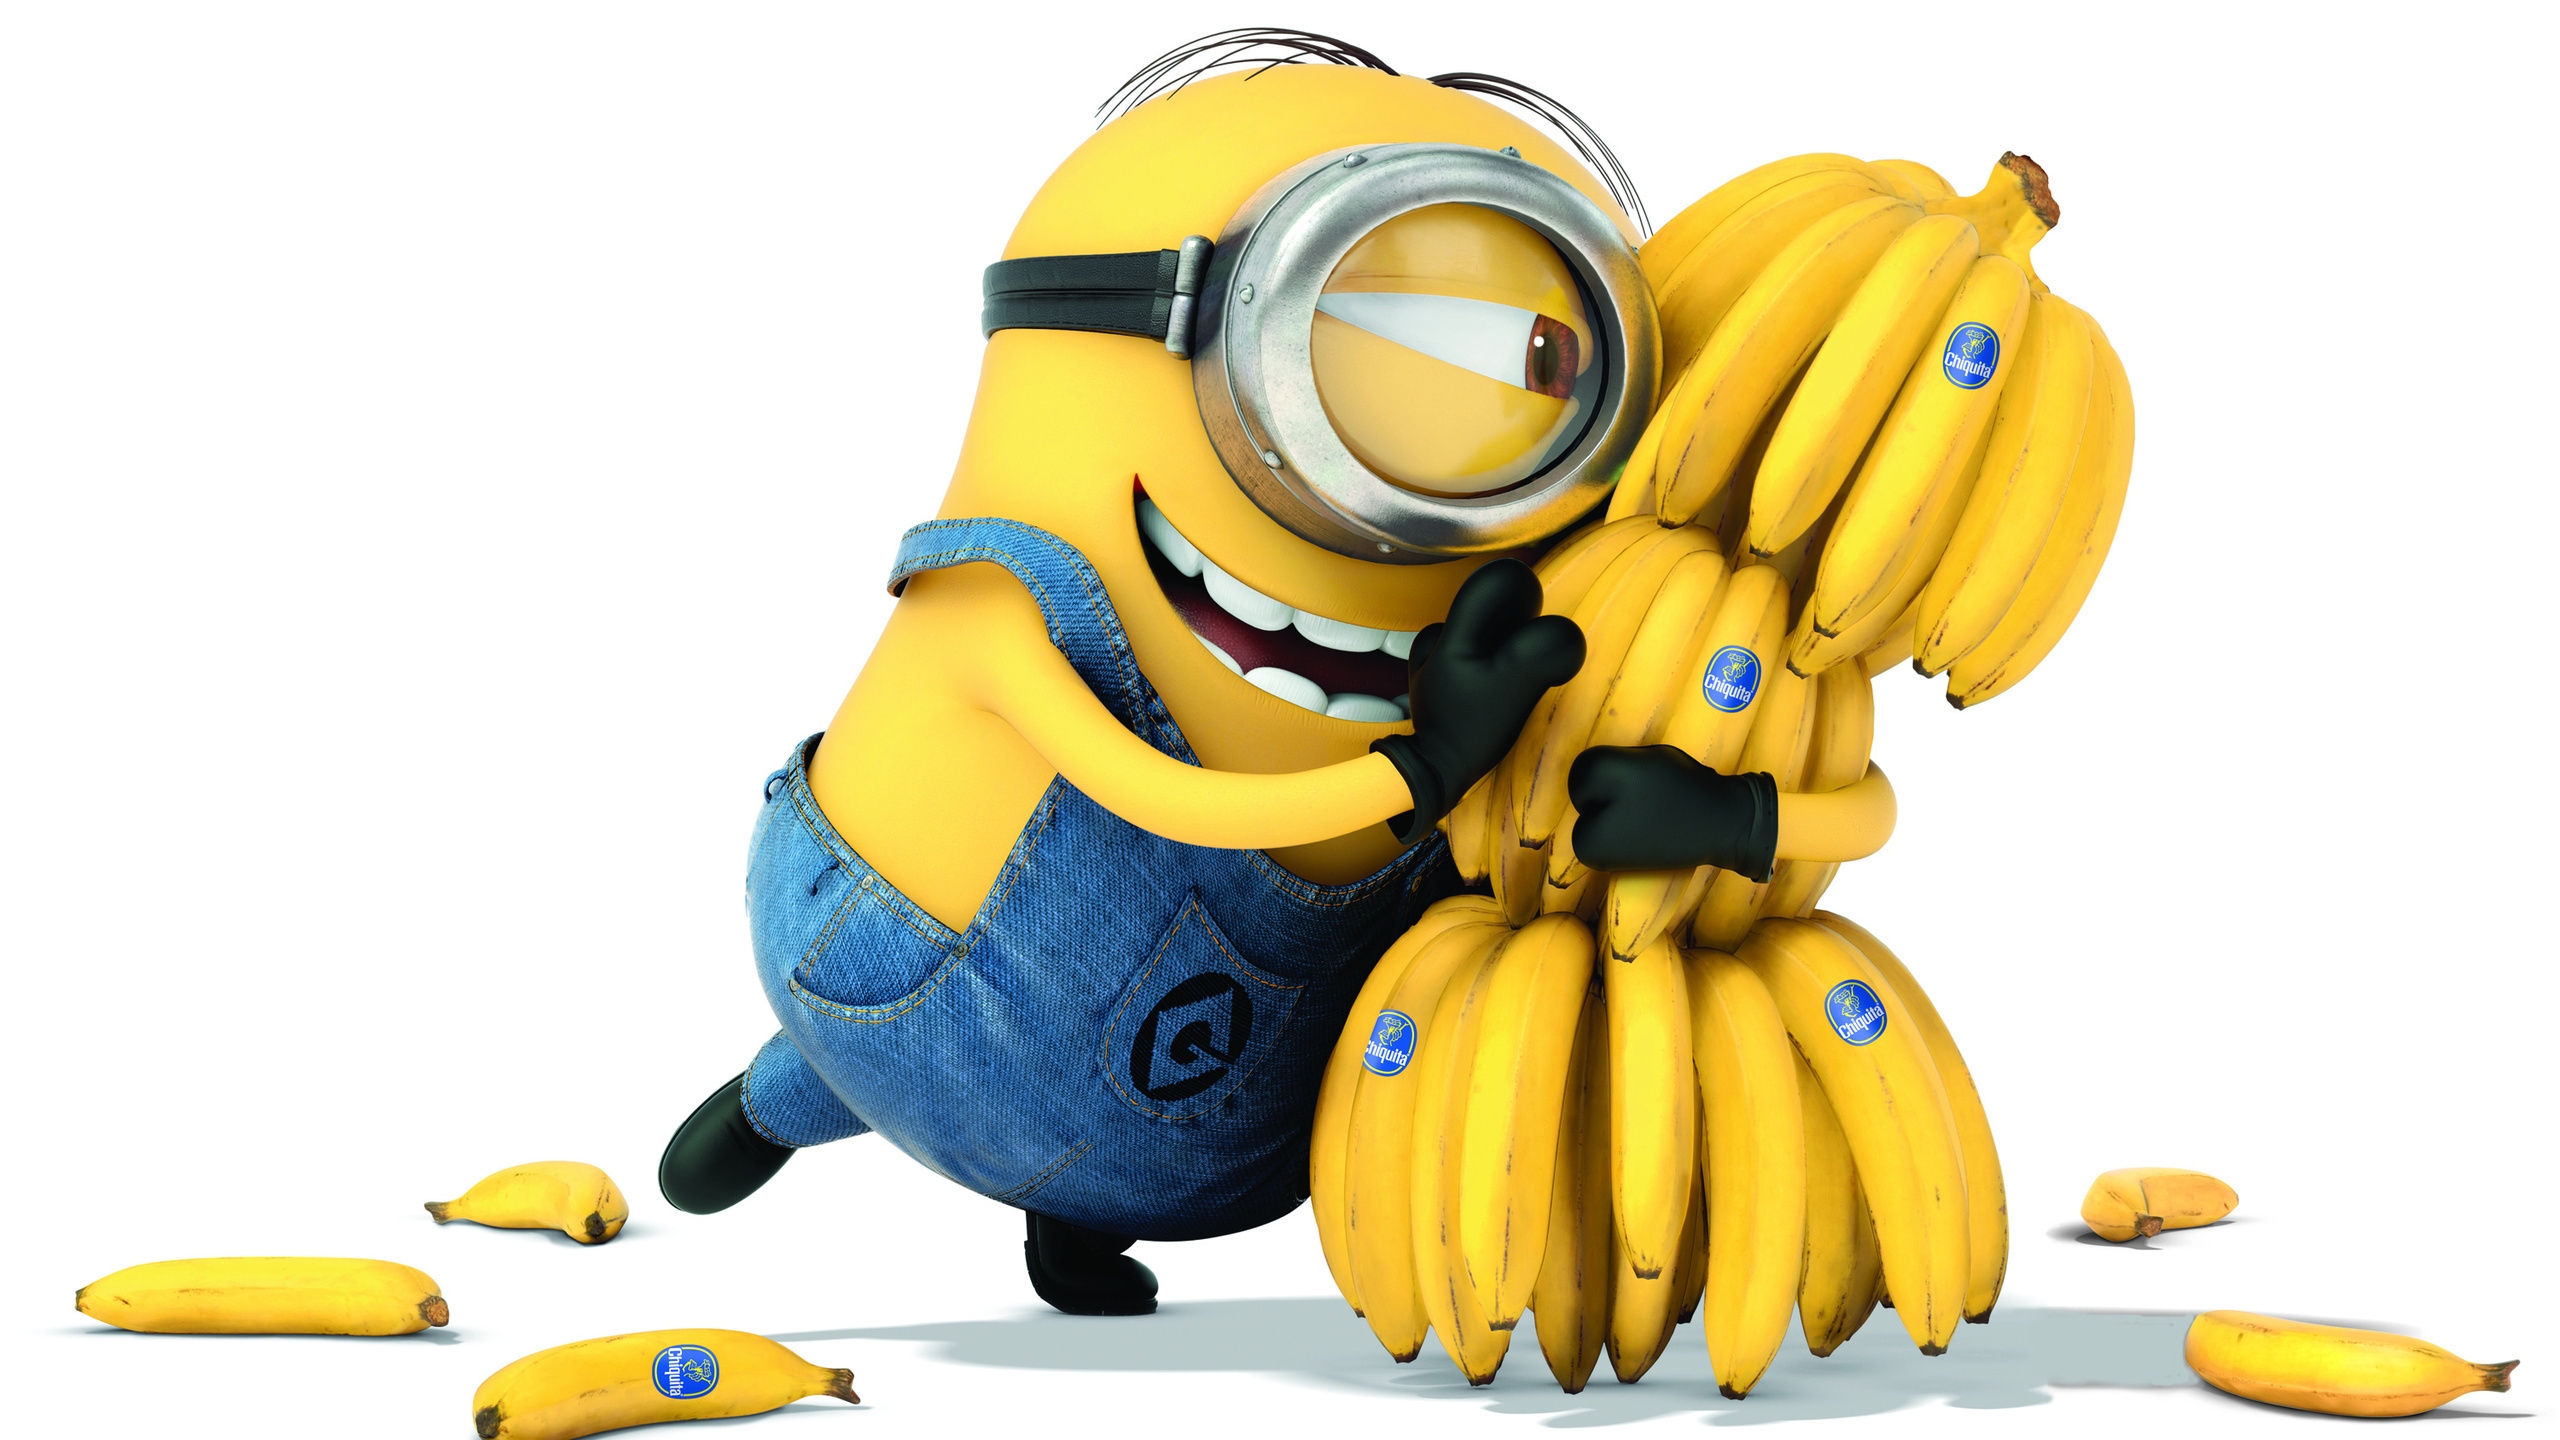 Minion Banana for 2560x1440 HDTV resolution